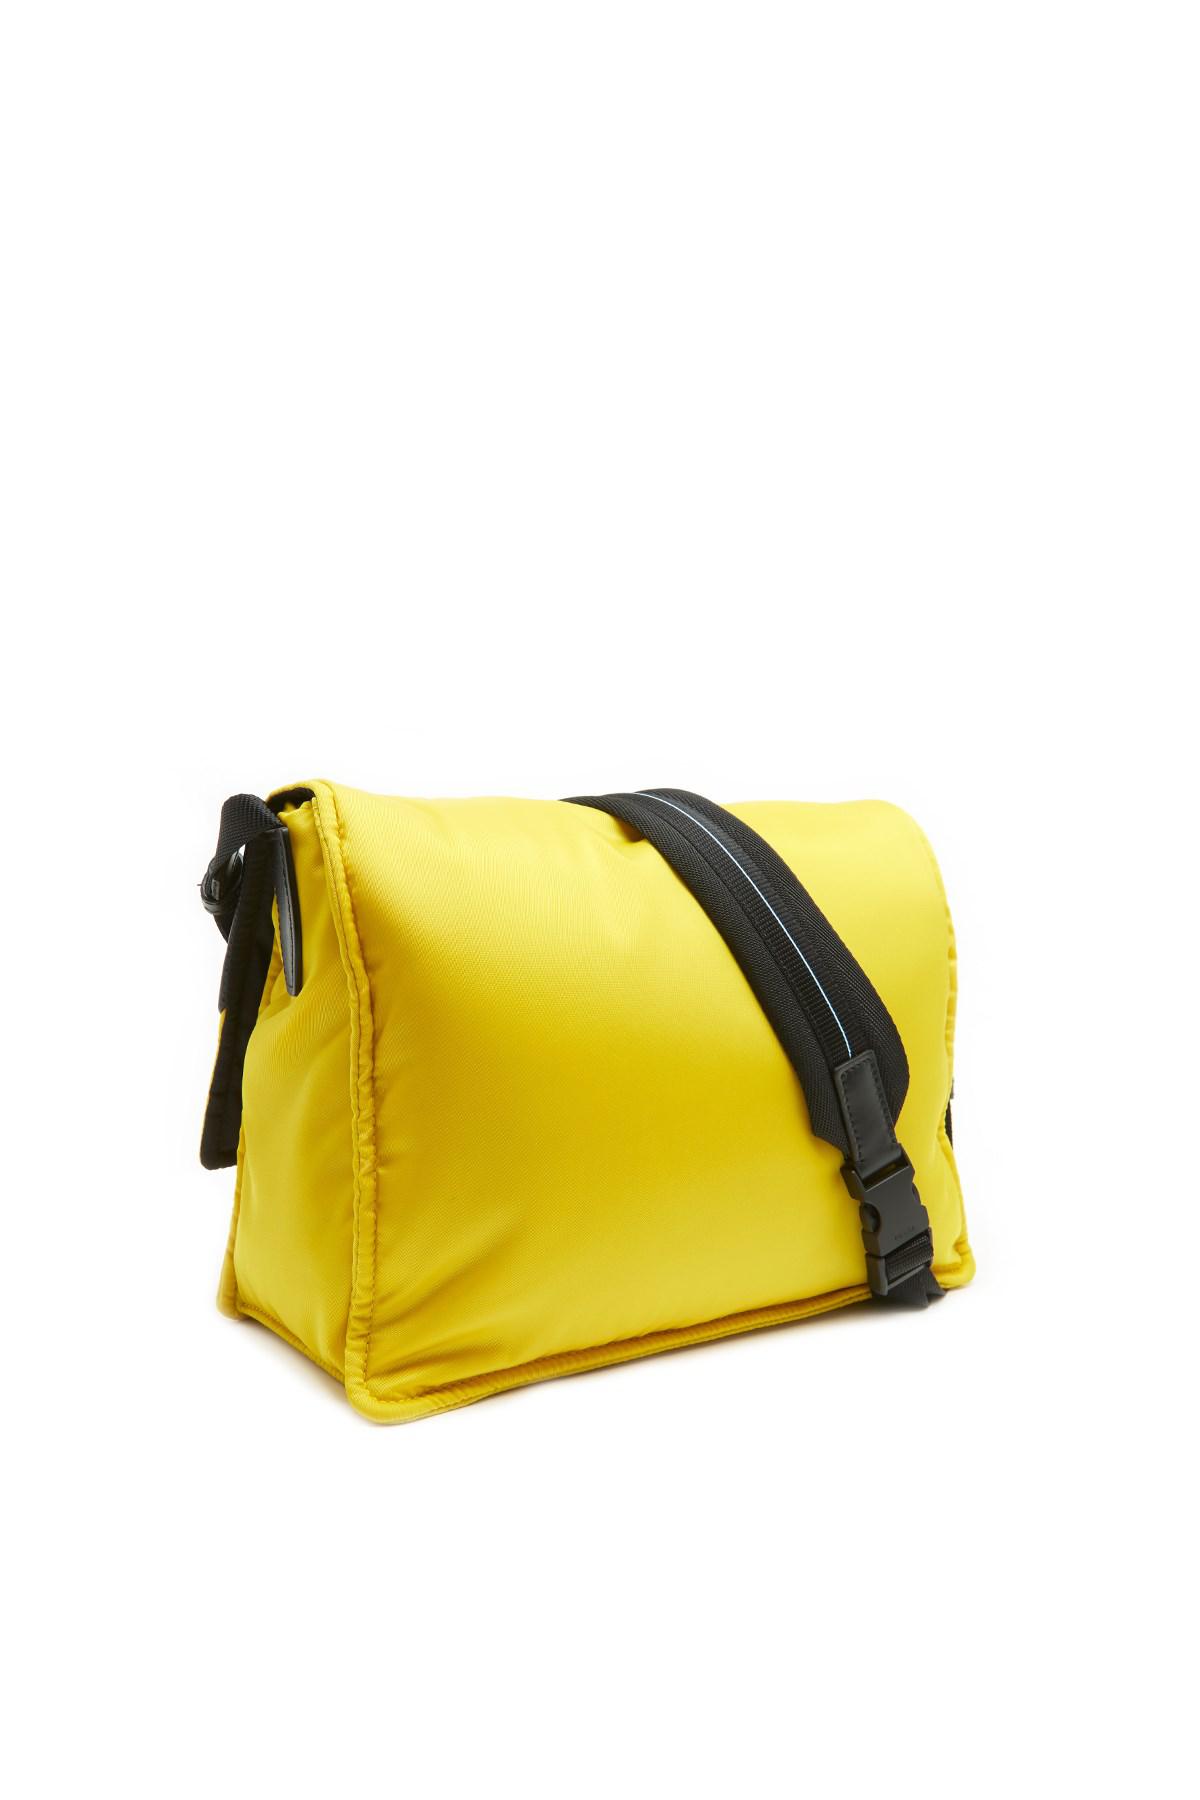 Prada Logo Crossbody Bag in Yellow - Lyst